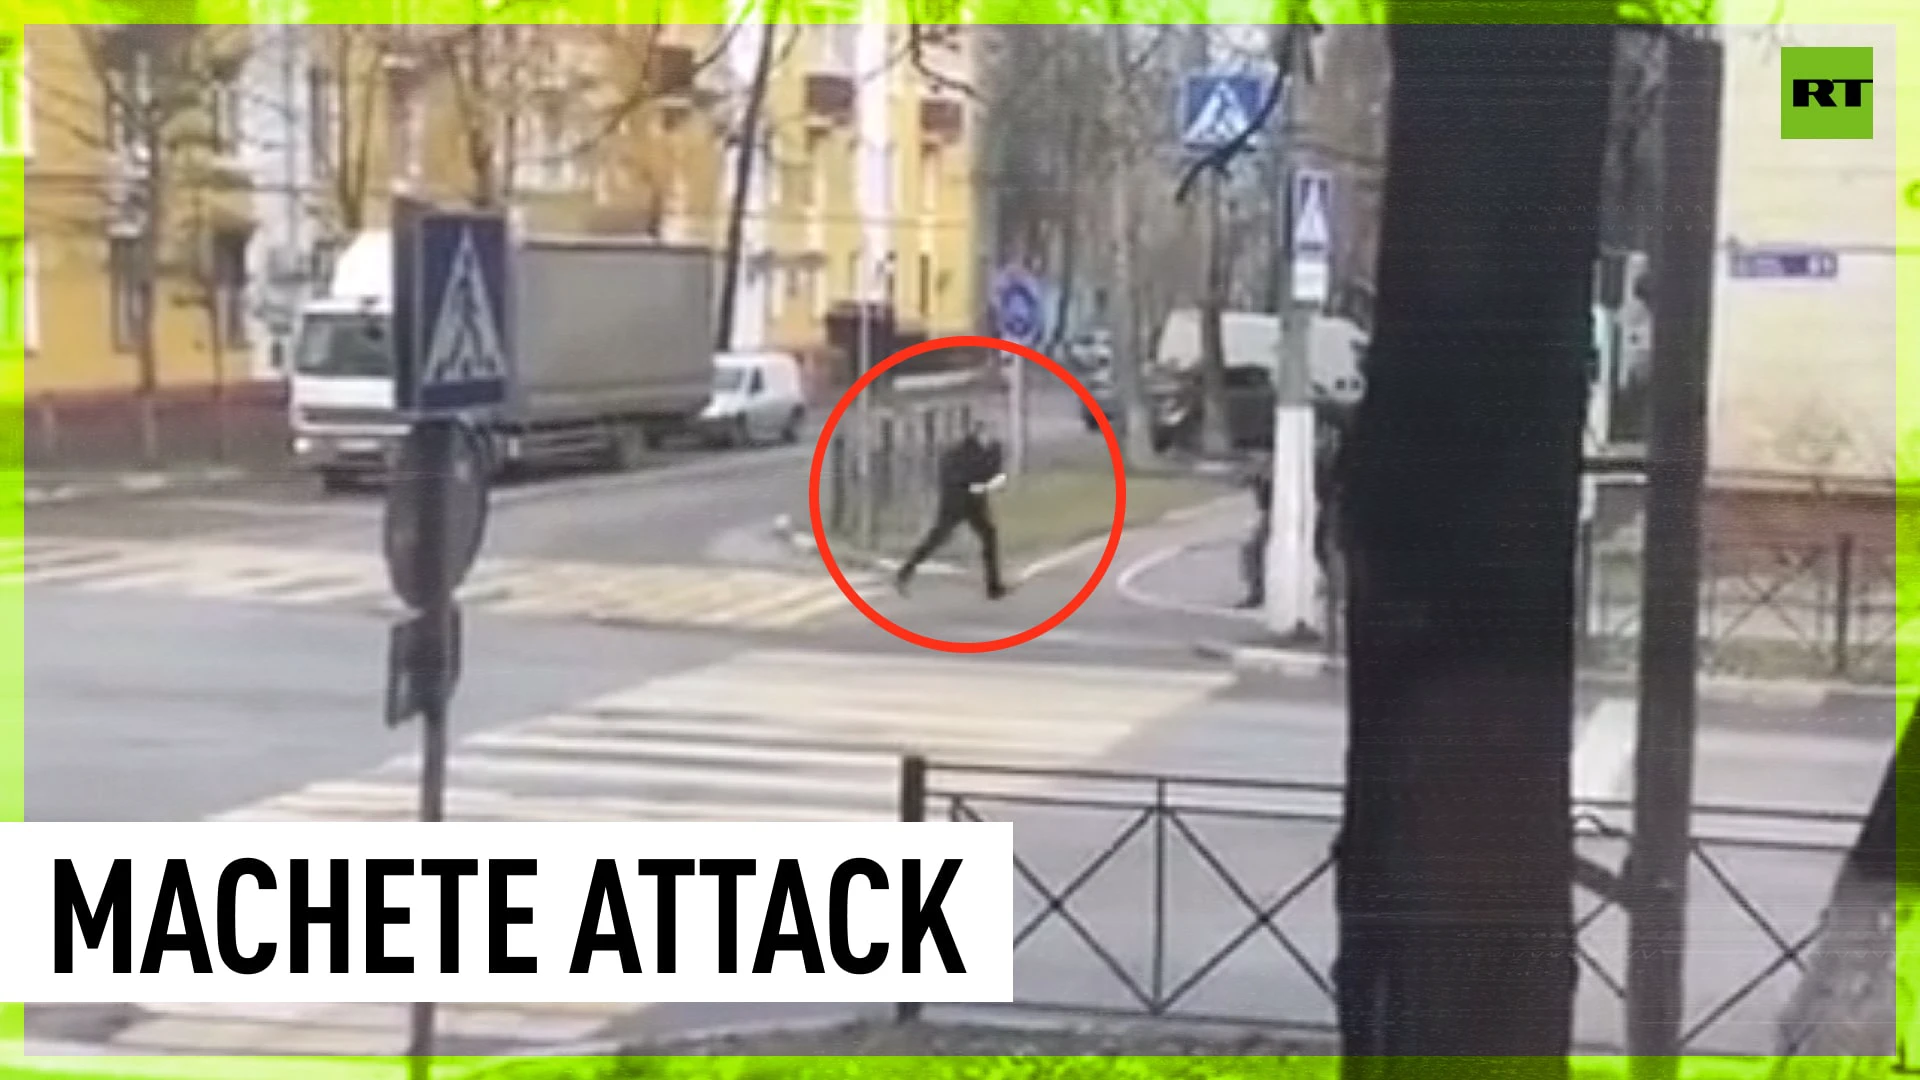 Machete-wielding man attacks police officers in Moscow Region